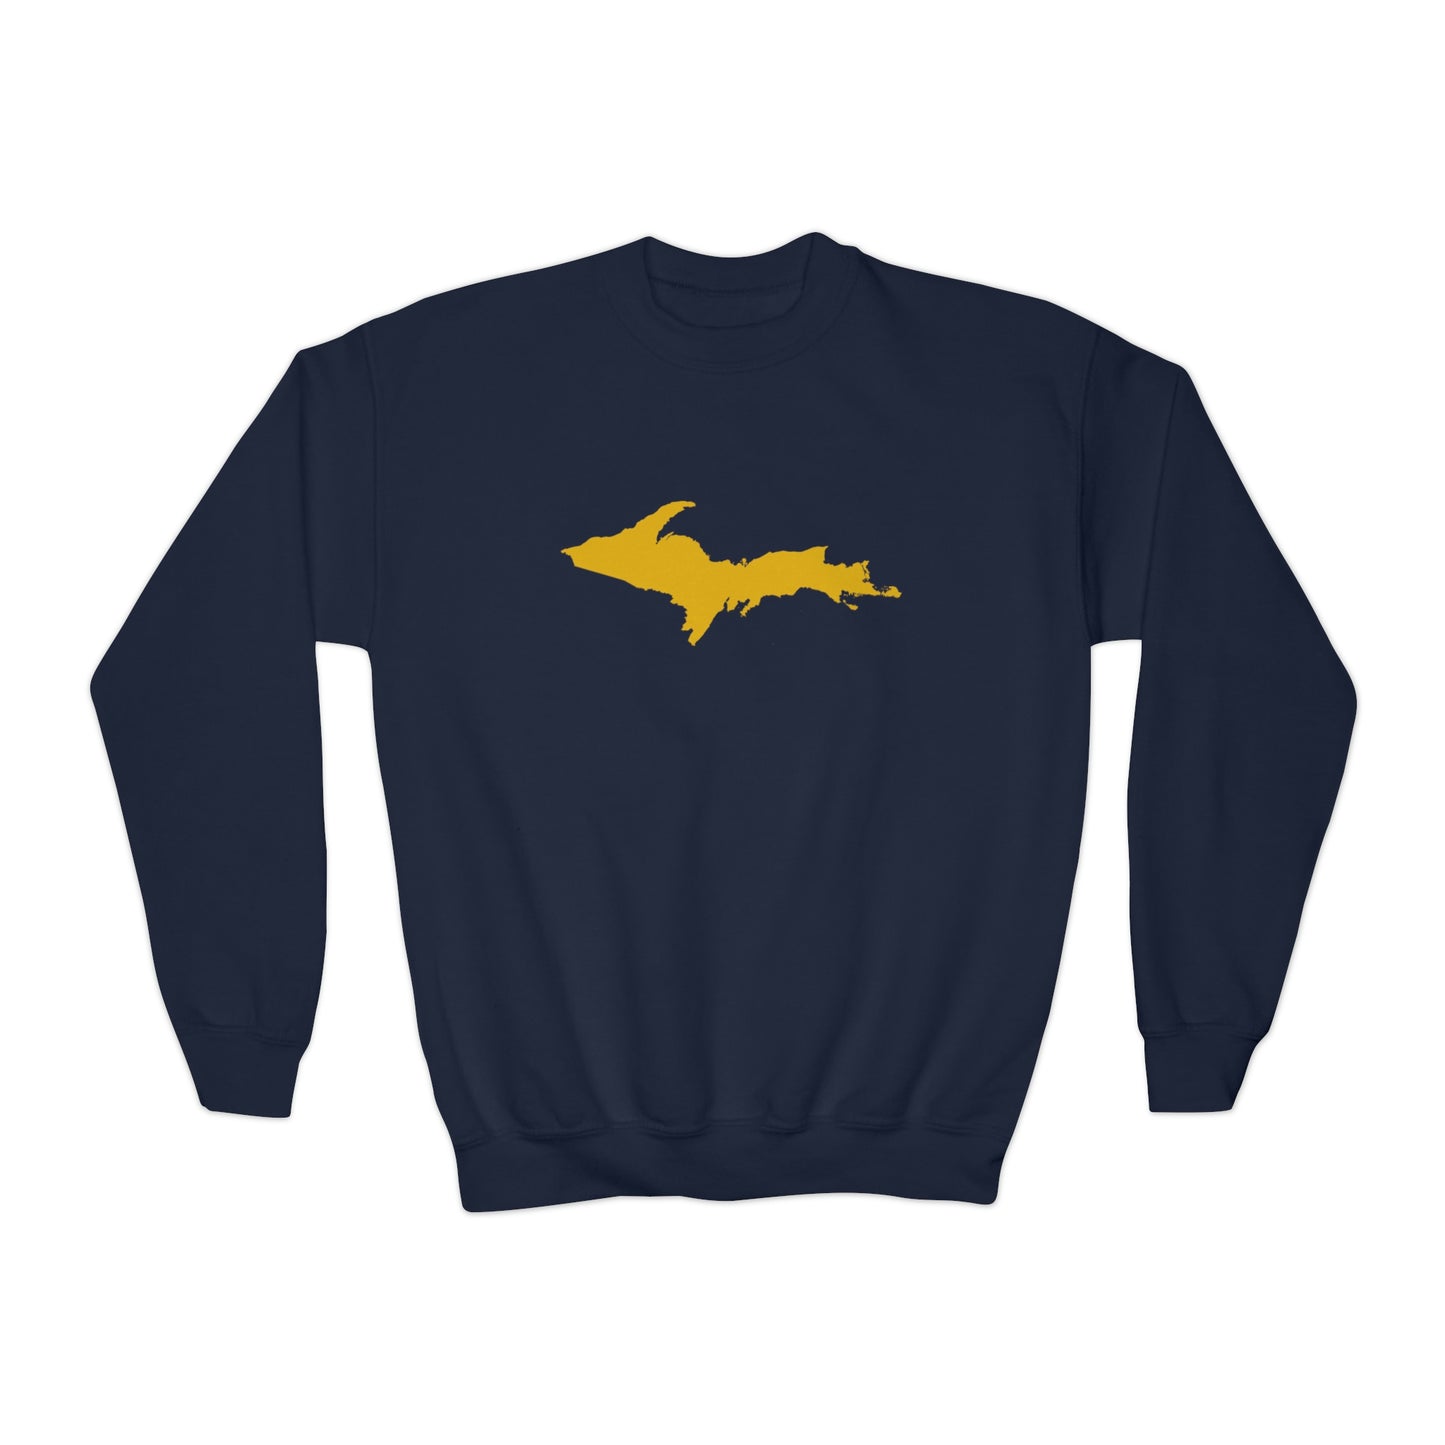 Michigan Upper Peninsula Youth Sweatshirt (w/ Gold UP Outline)